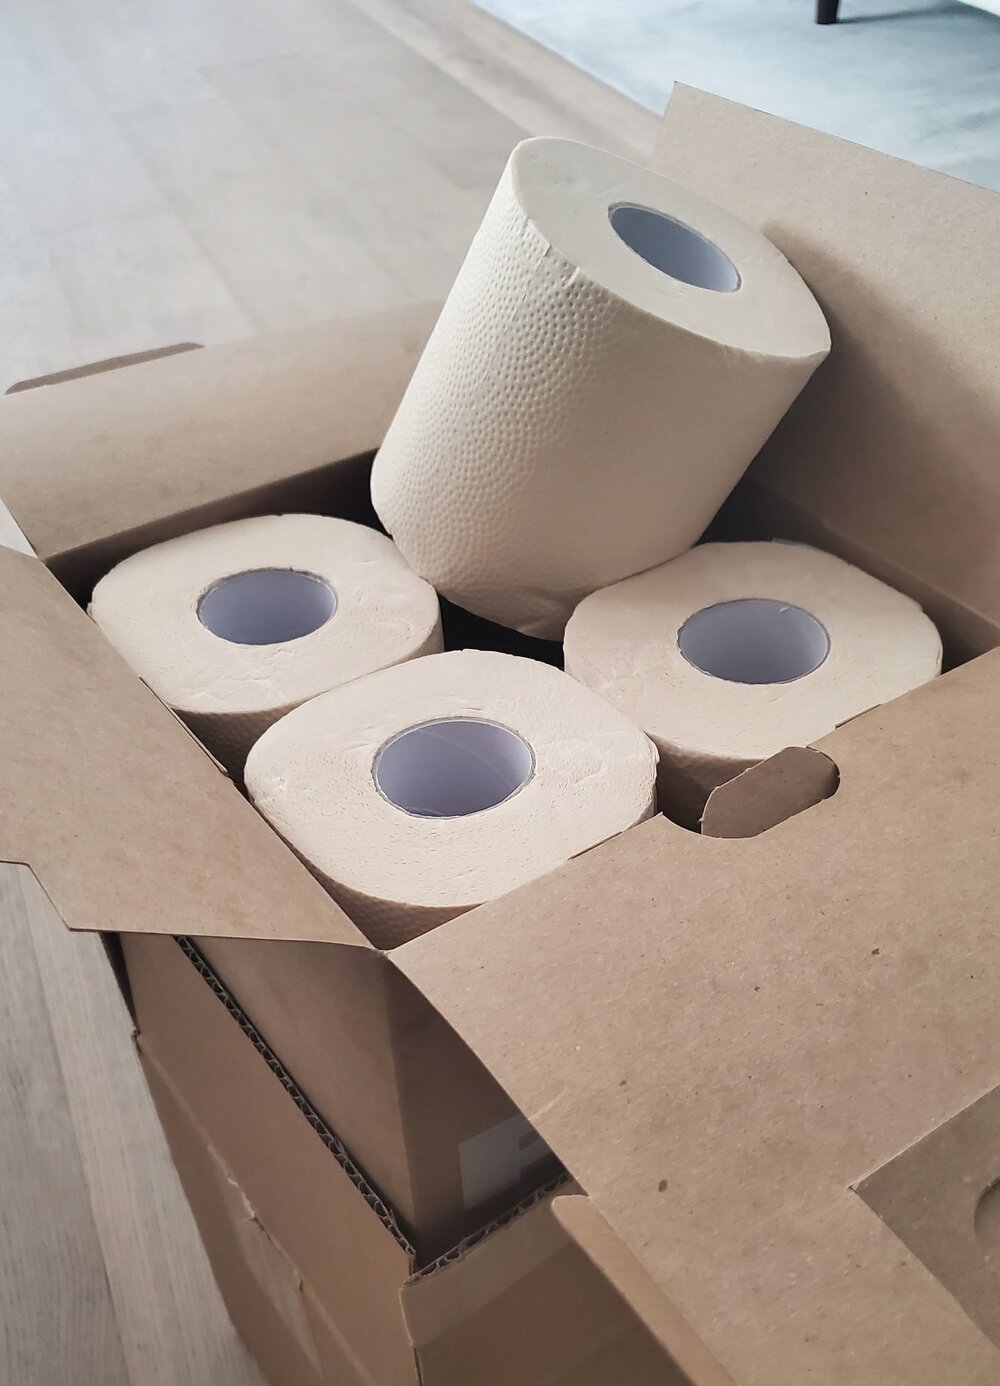 Bumboo  Tree Free Toilet Paper